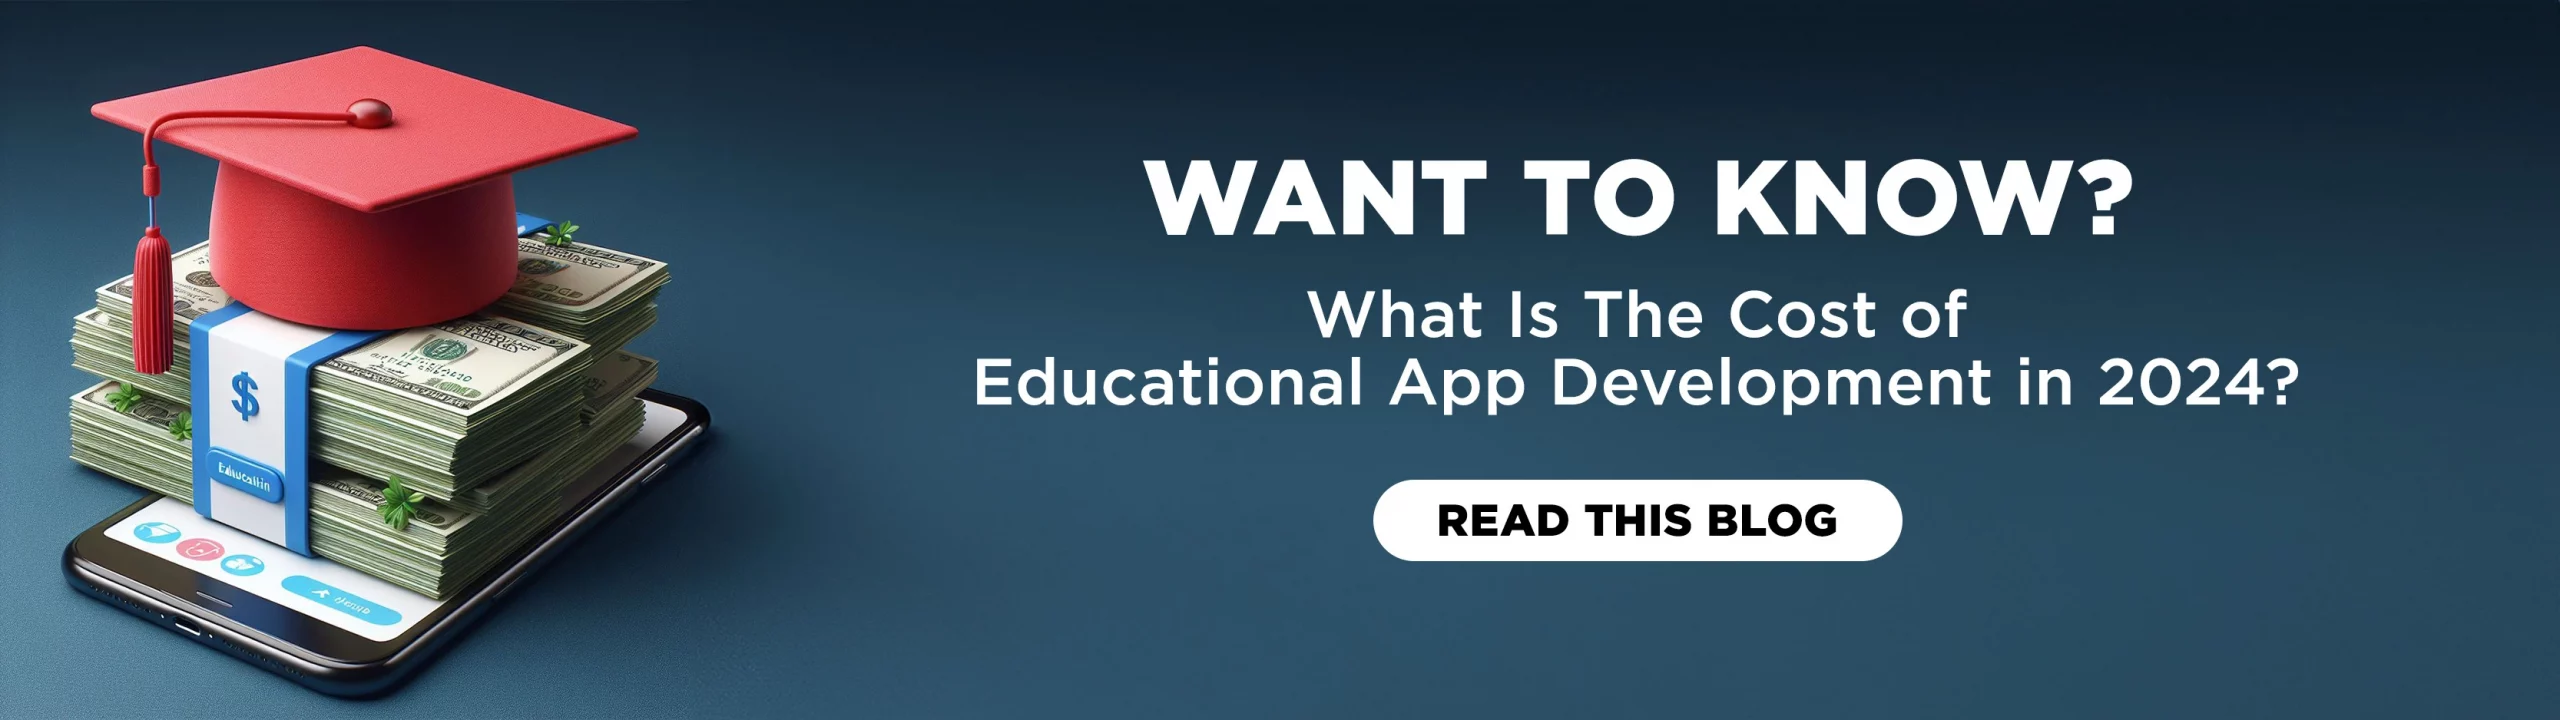 education app development cost